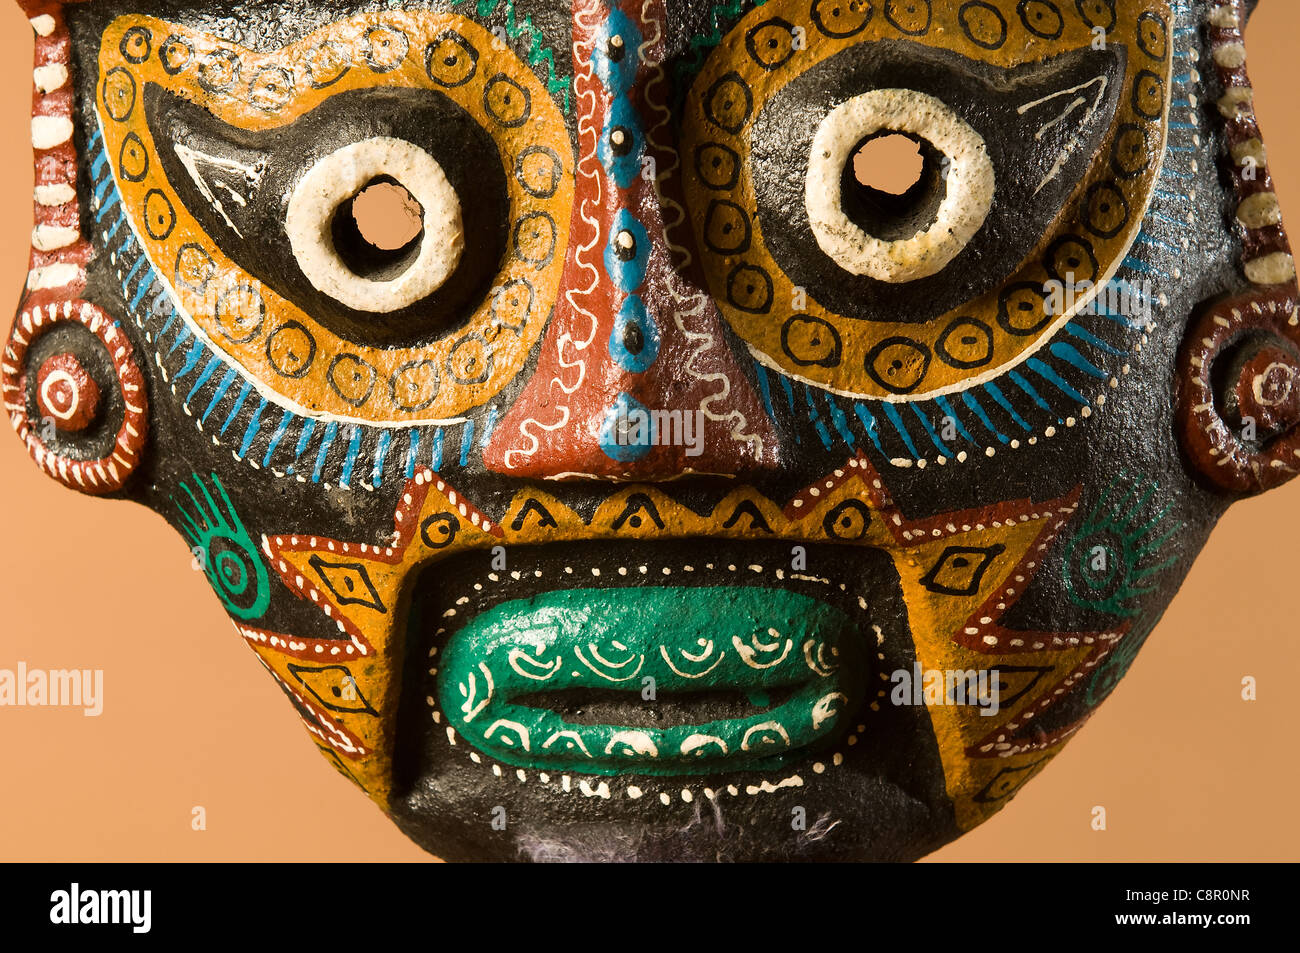 Ecuadorian mask in studio setting  Stock Photo